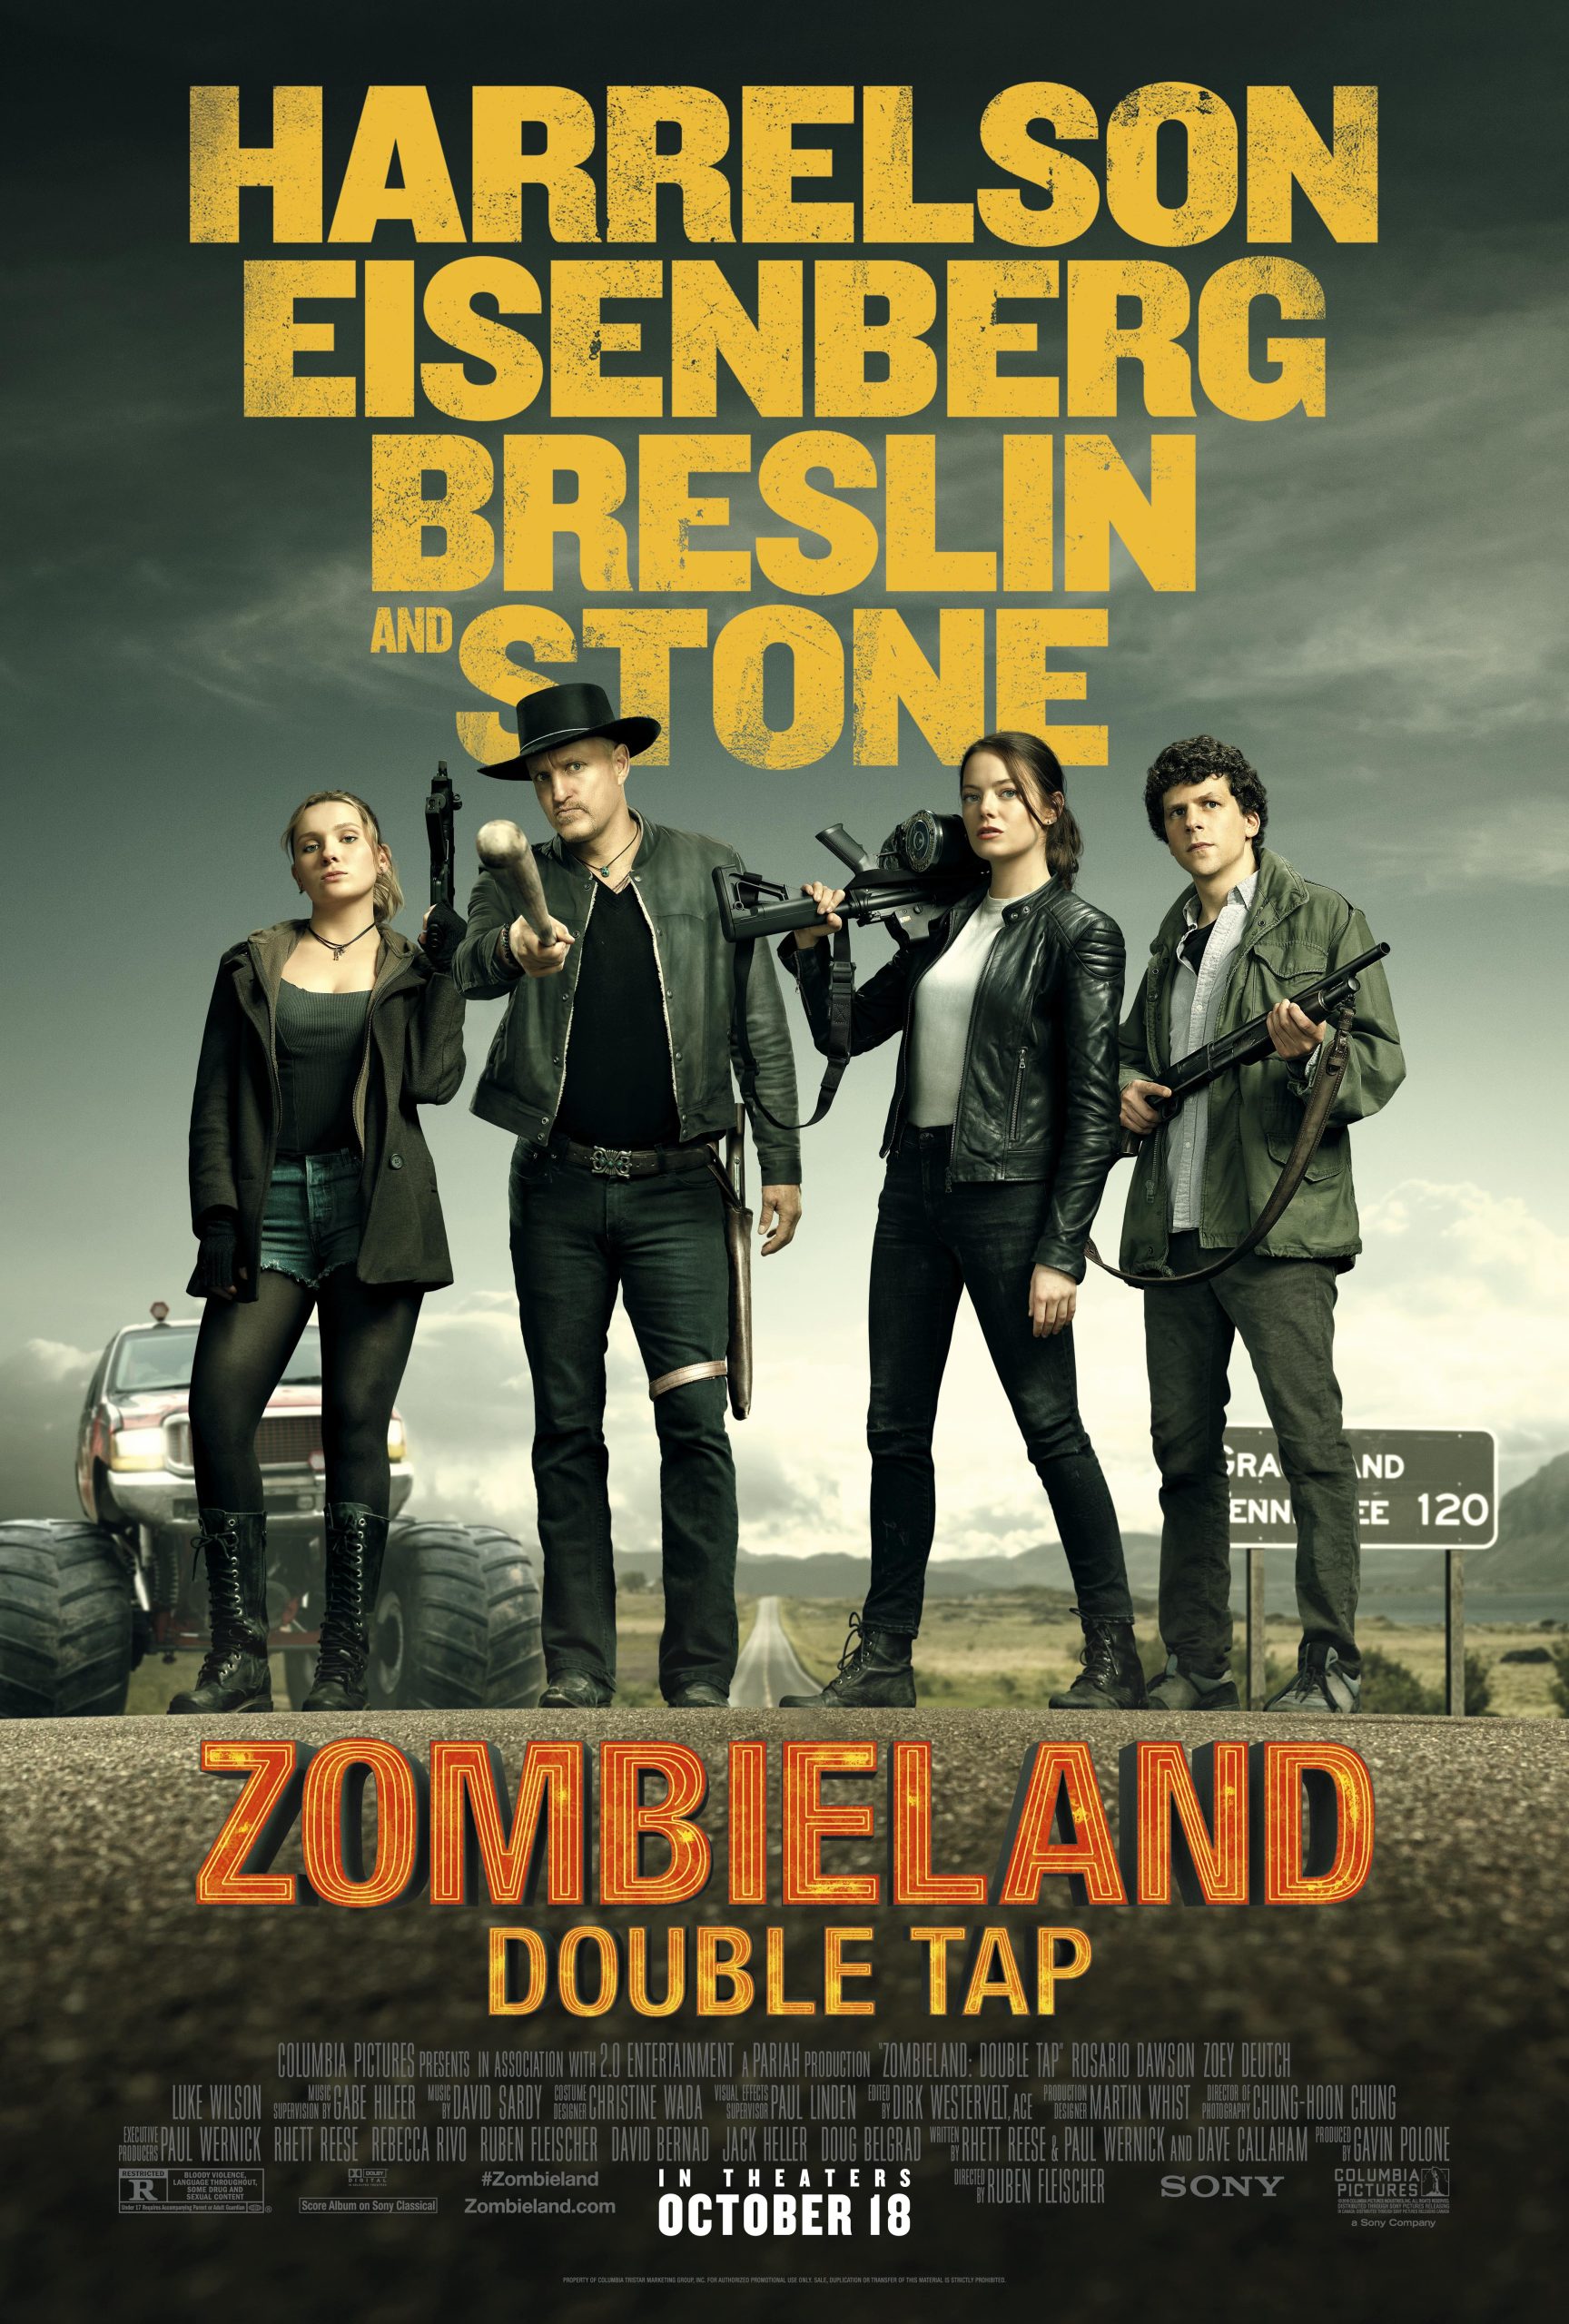 Zombieland: Double Tap (2019) ซอมบี้แลนด์ 2 แก๊งซ่าส์ล่าล้างซอมบี้ Woody Harrelson